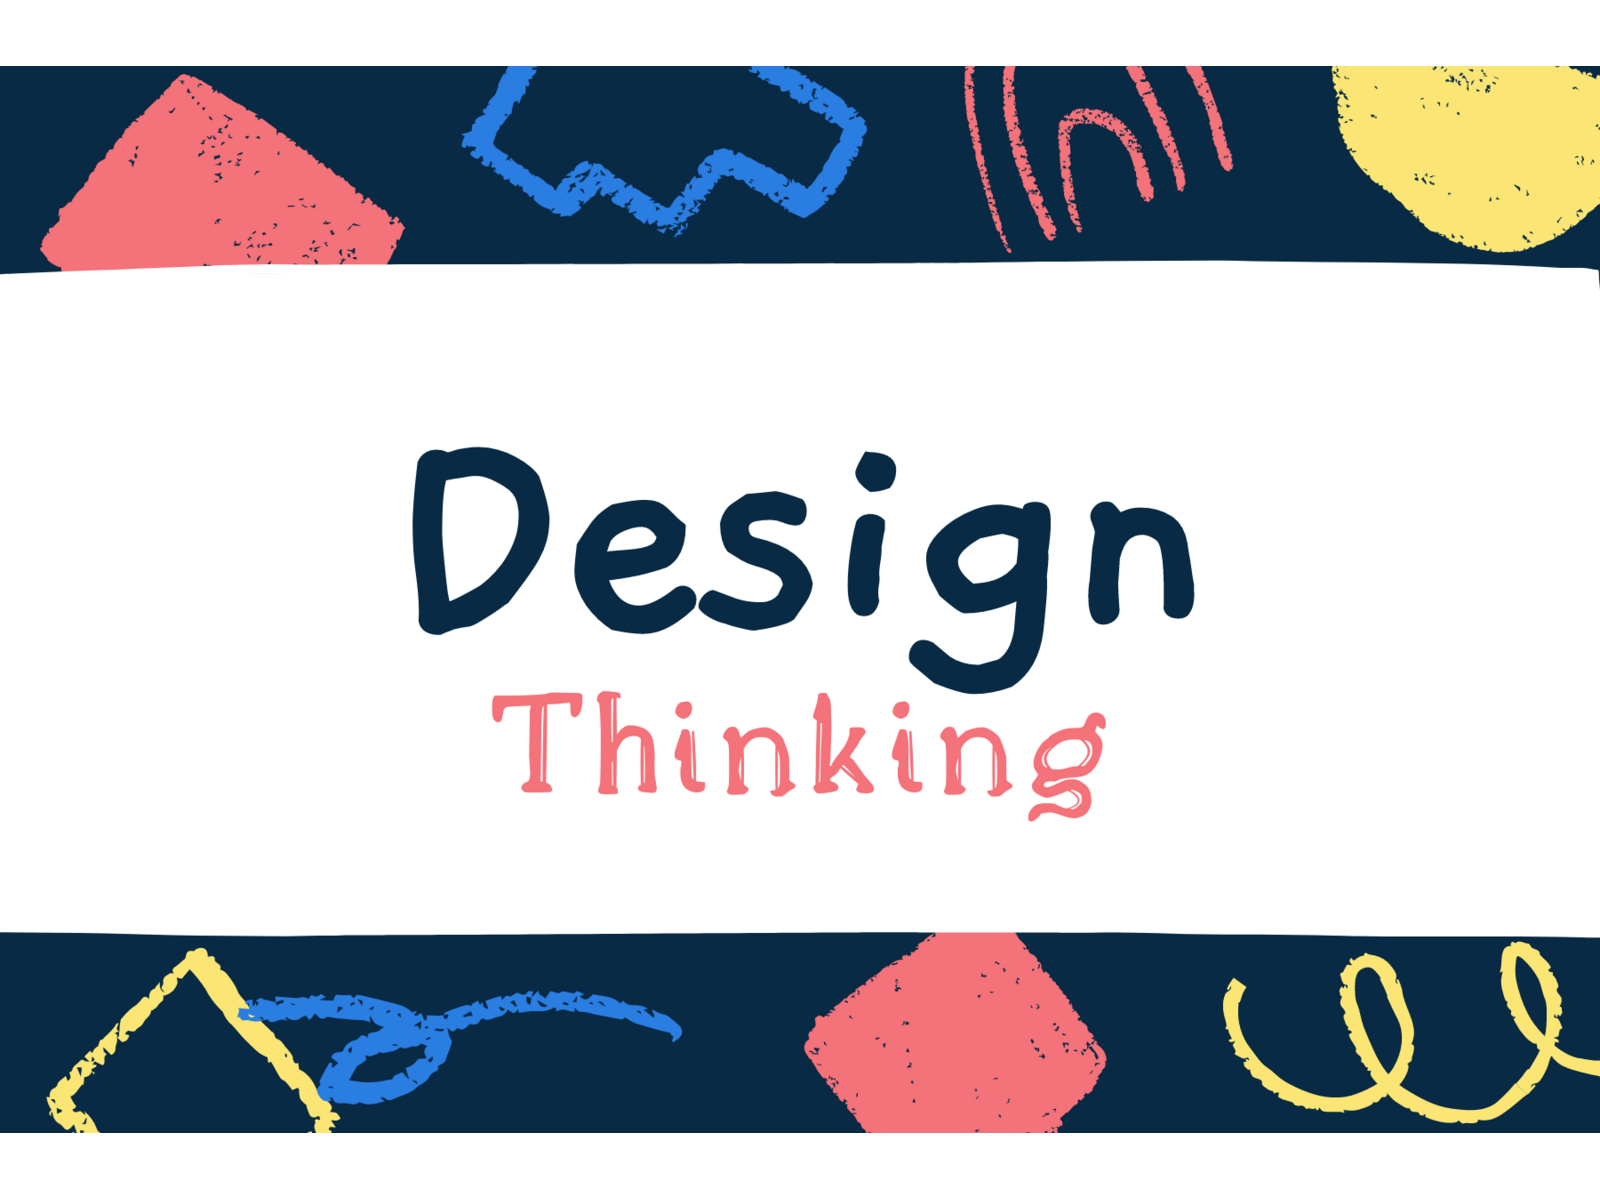 Design thinking